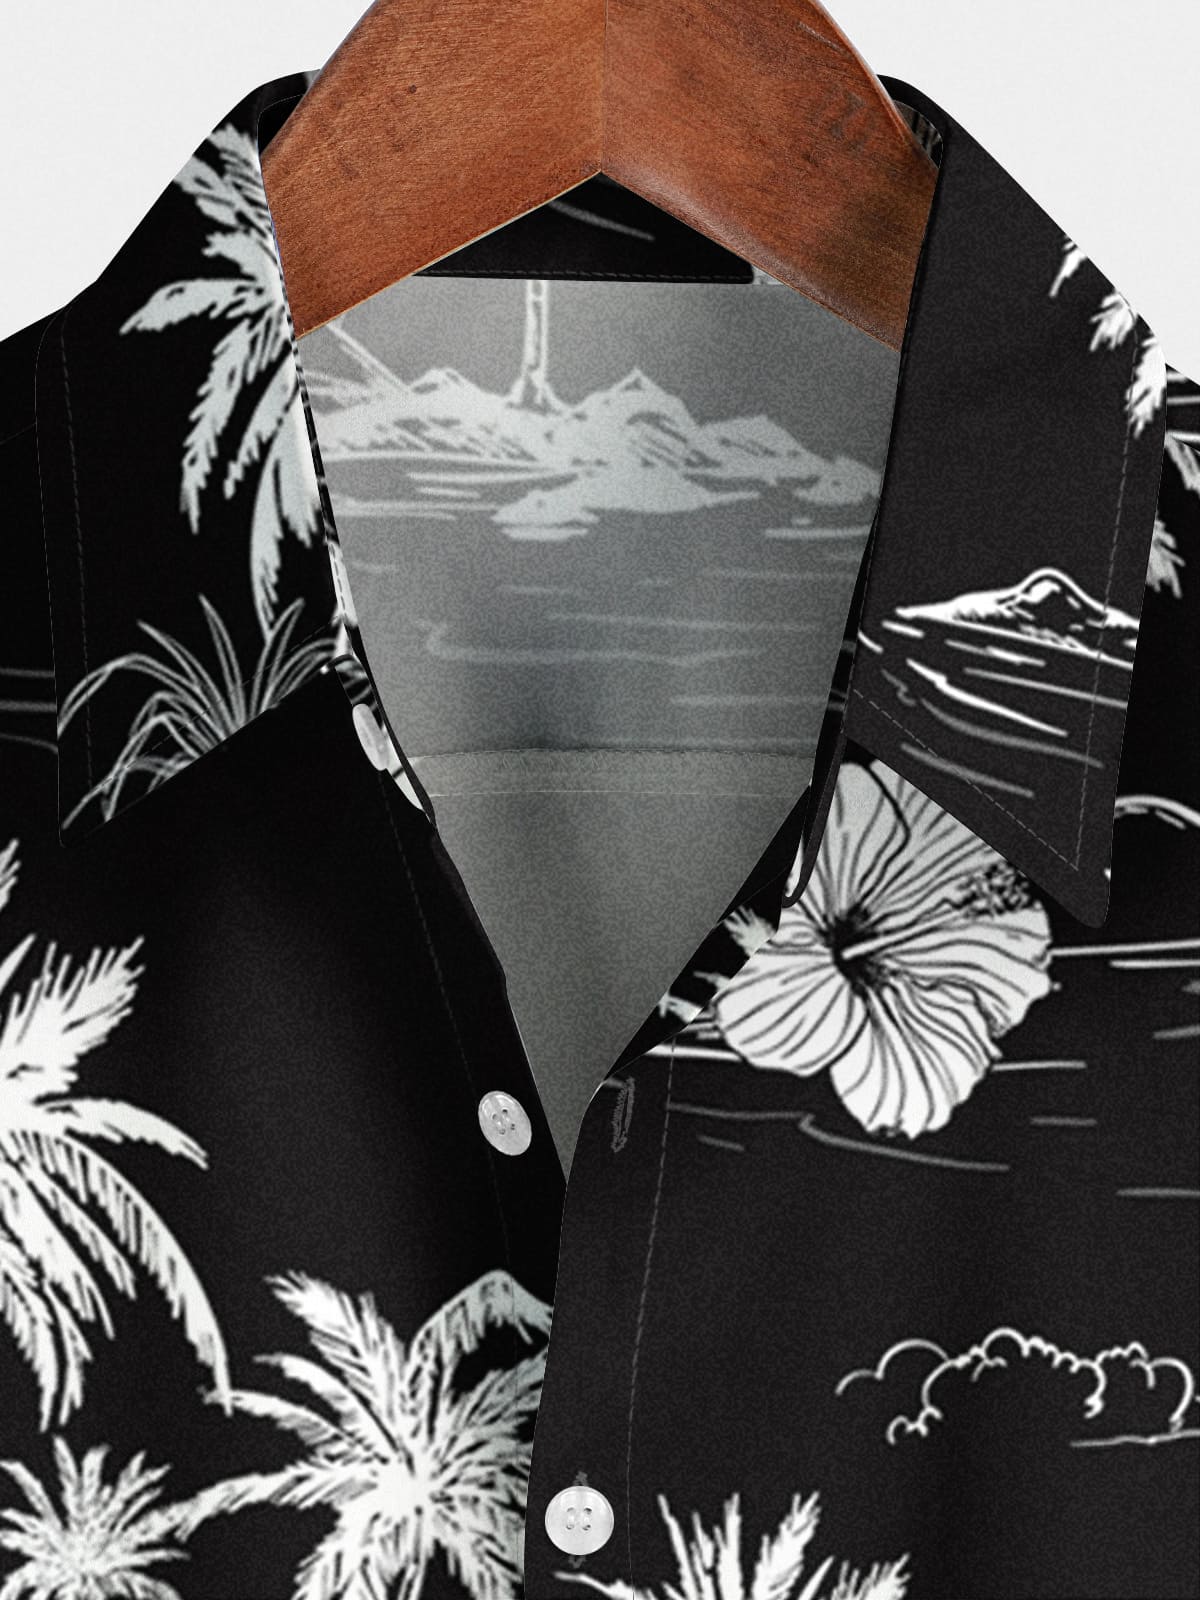 Men's Holiday Hawaiian Short Sleeve Shirt